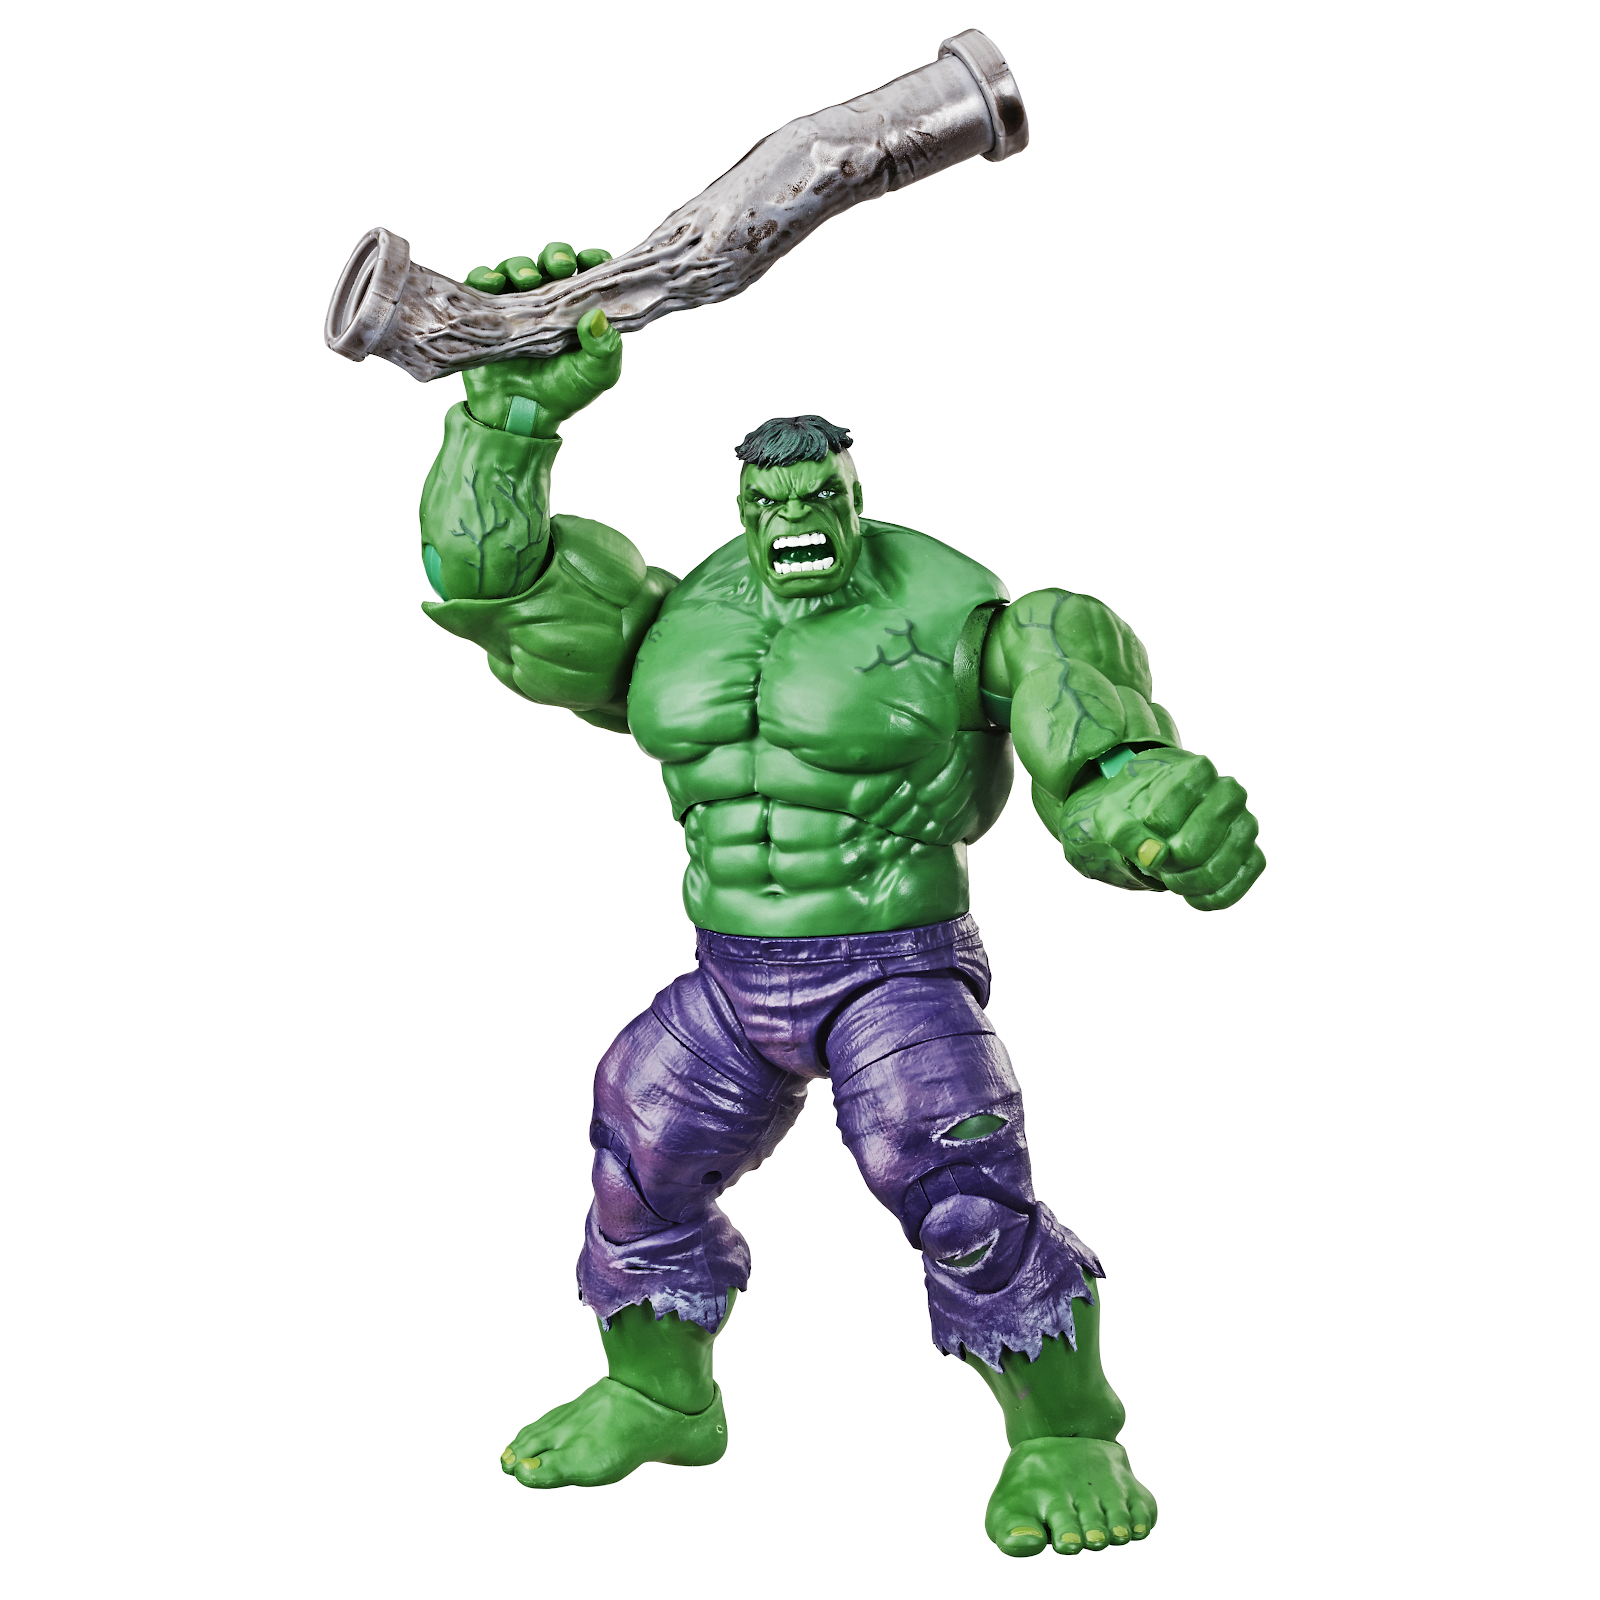 Hasbro's Marvel 80th Anniversary Exclusive Hulk Figure